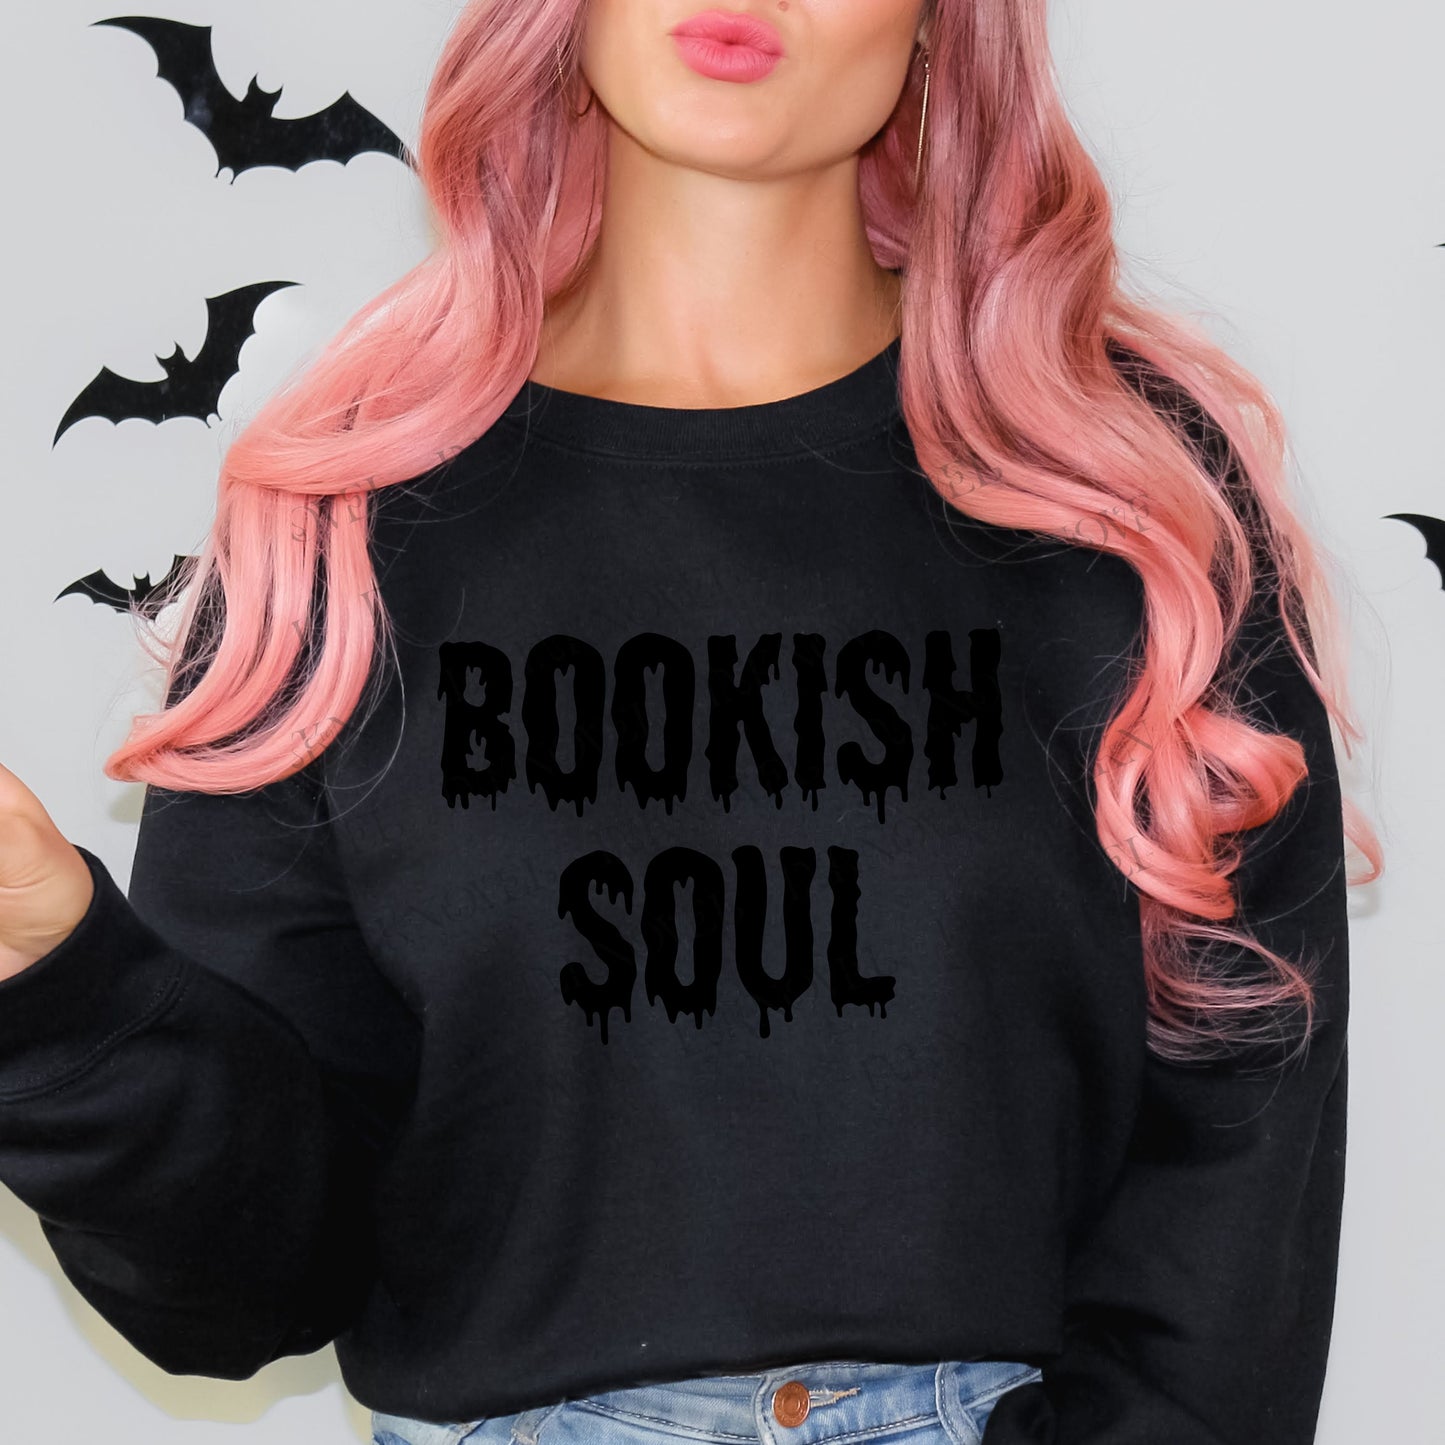 Bookish Soul Sweatshirt